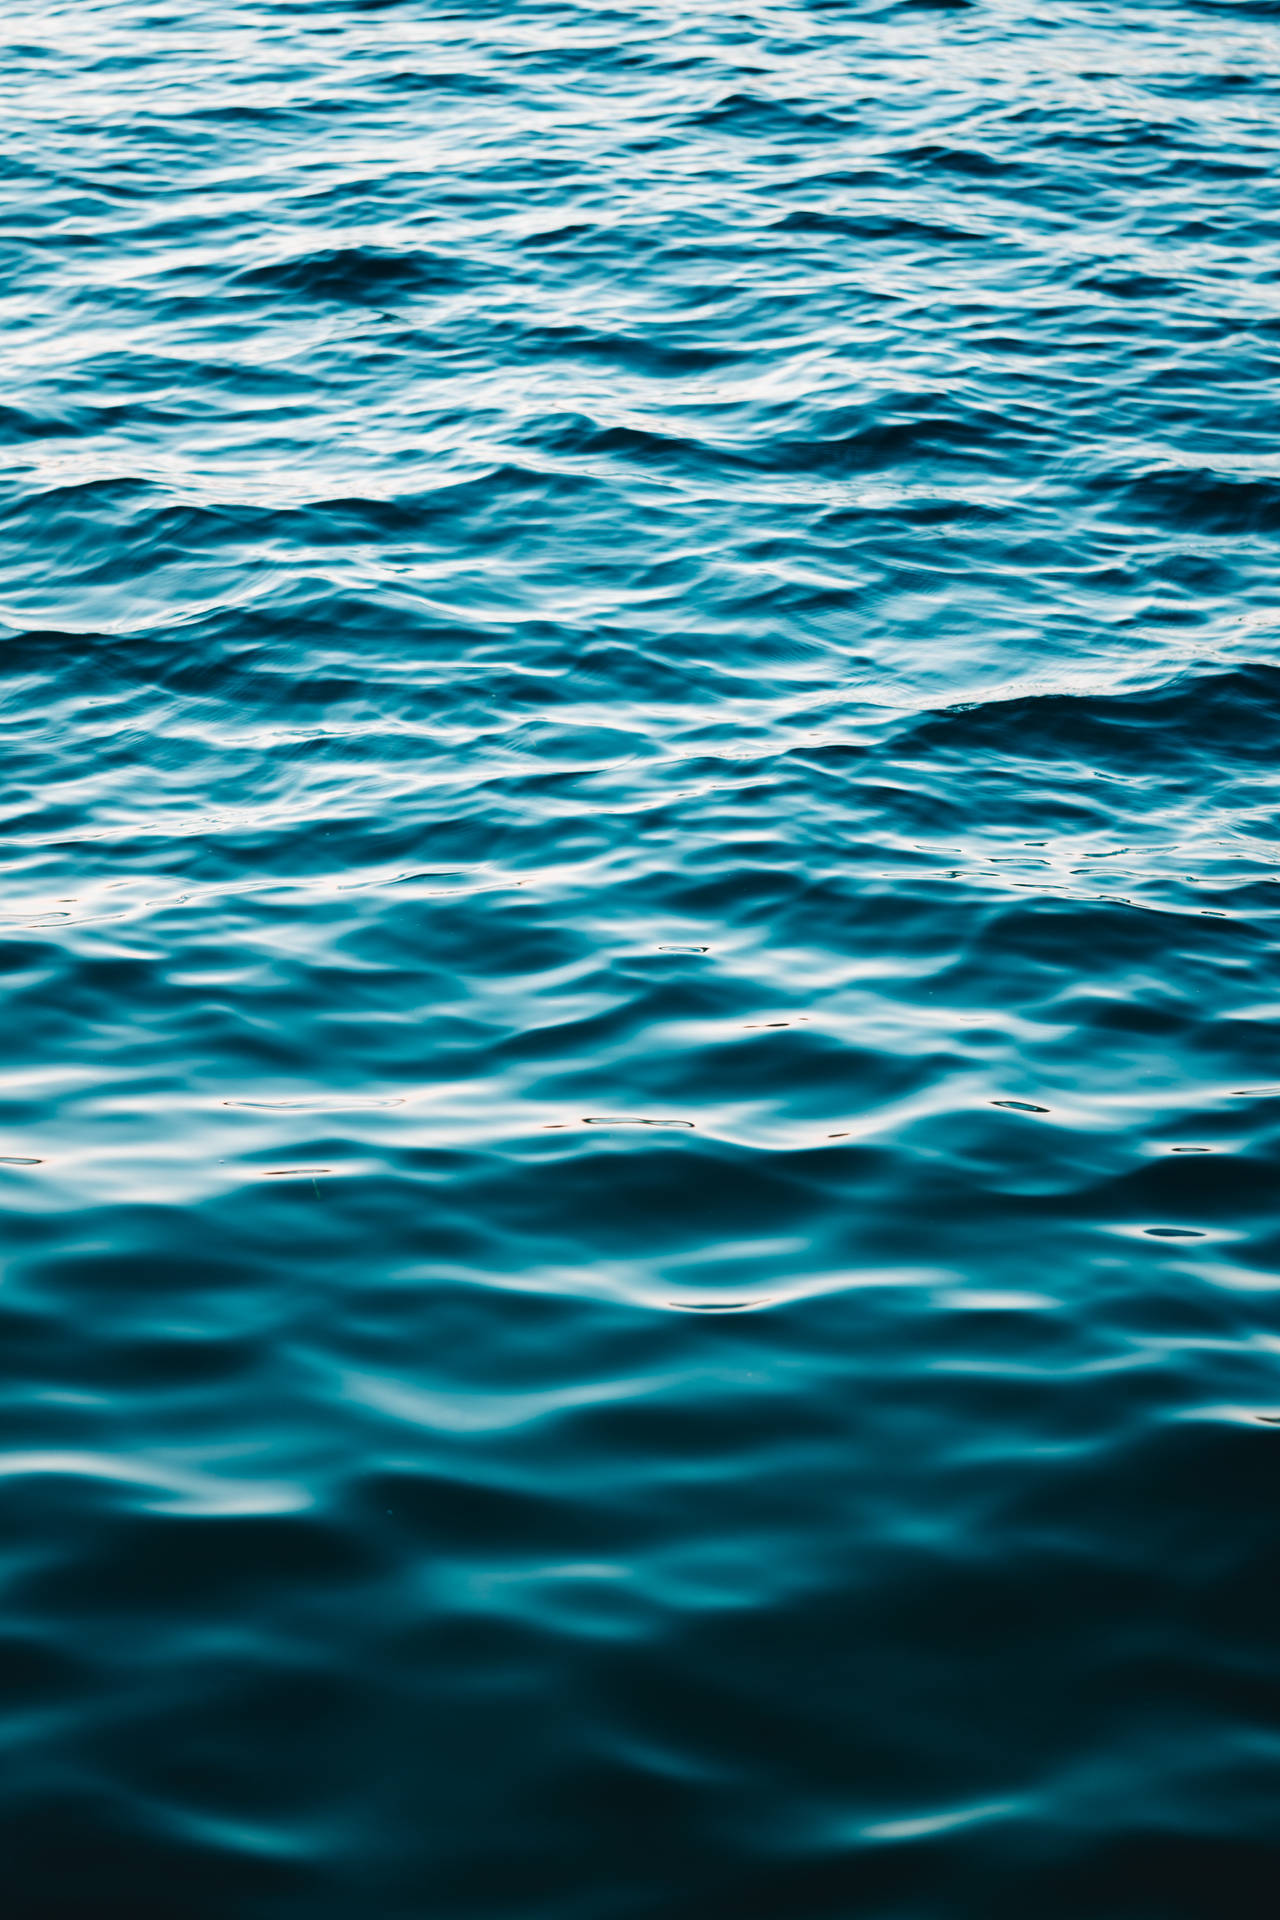 Solid Dark Blue Sea Water Surface Background